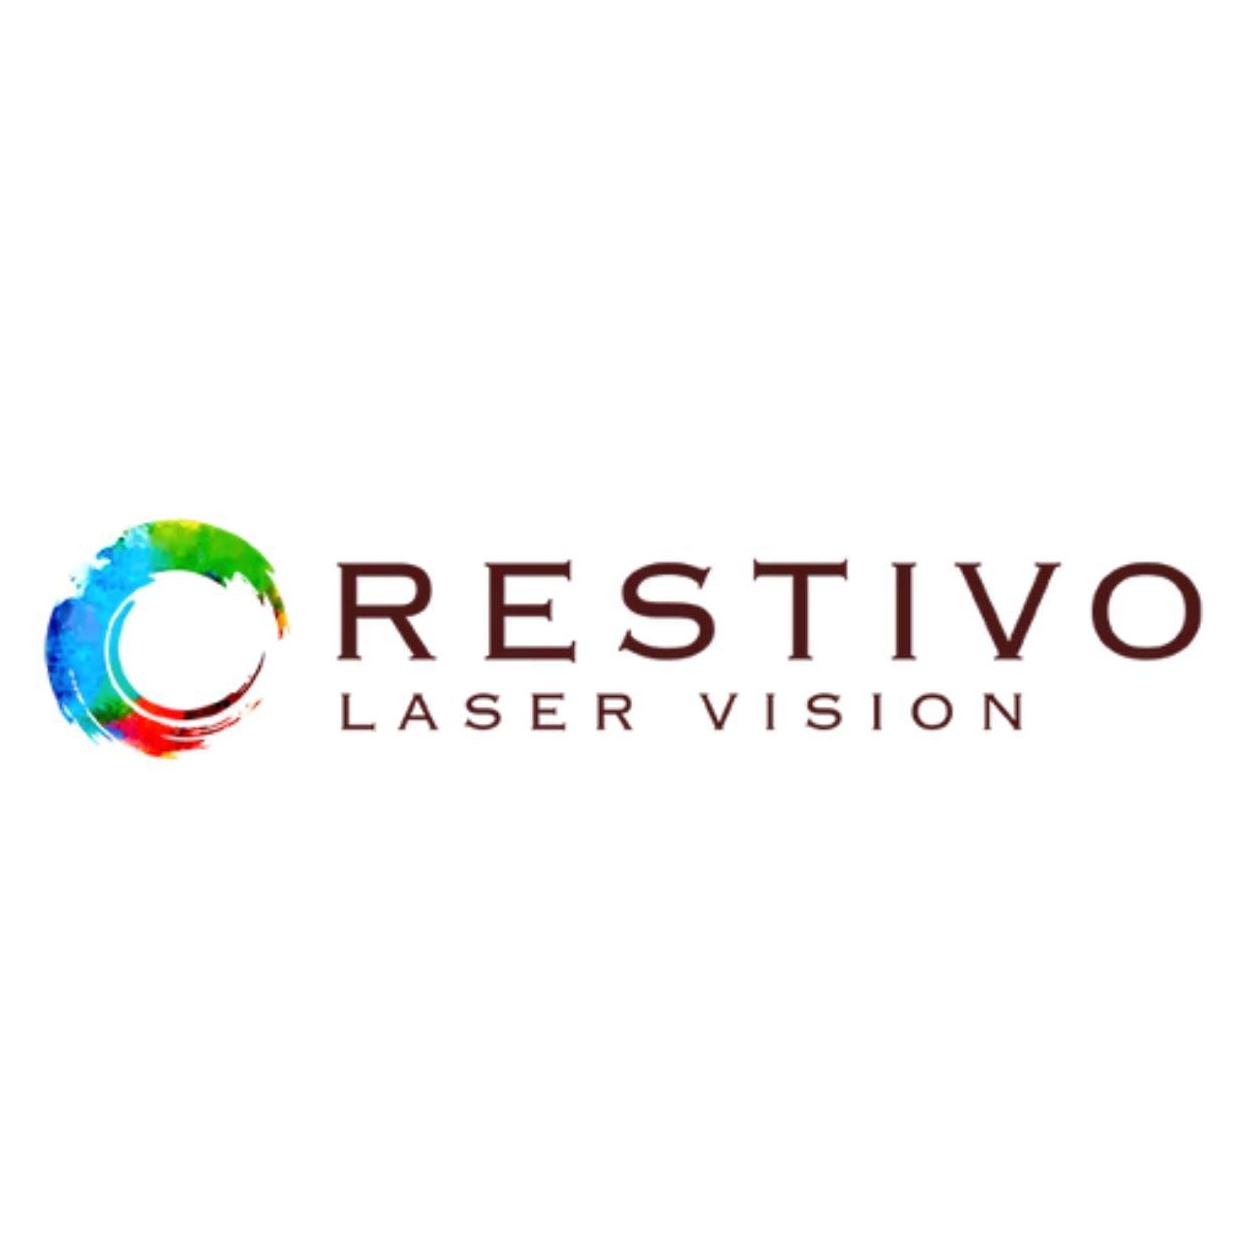 Restivo LaserVision